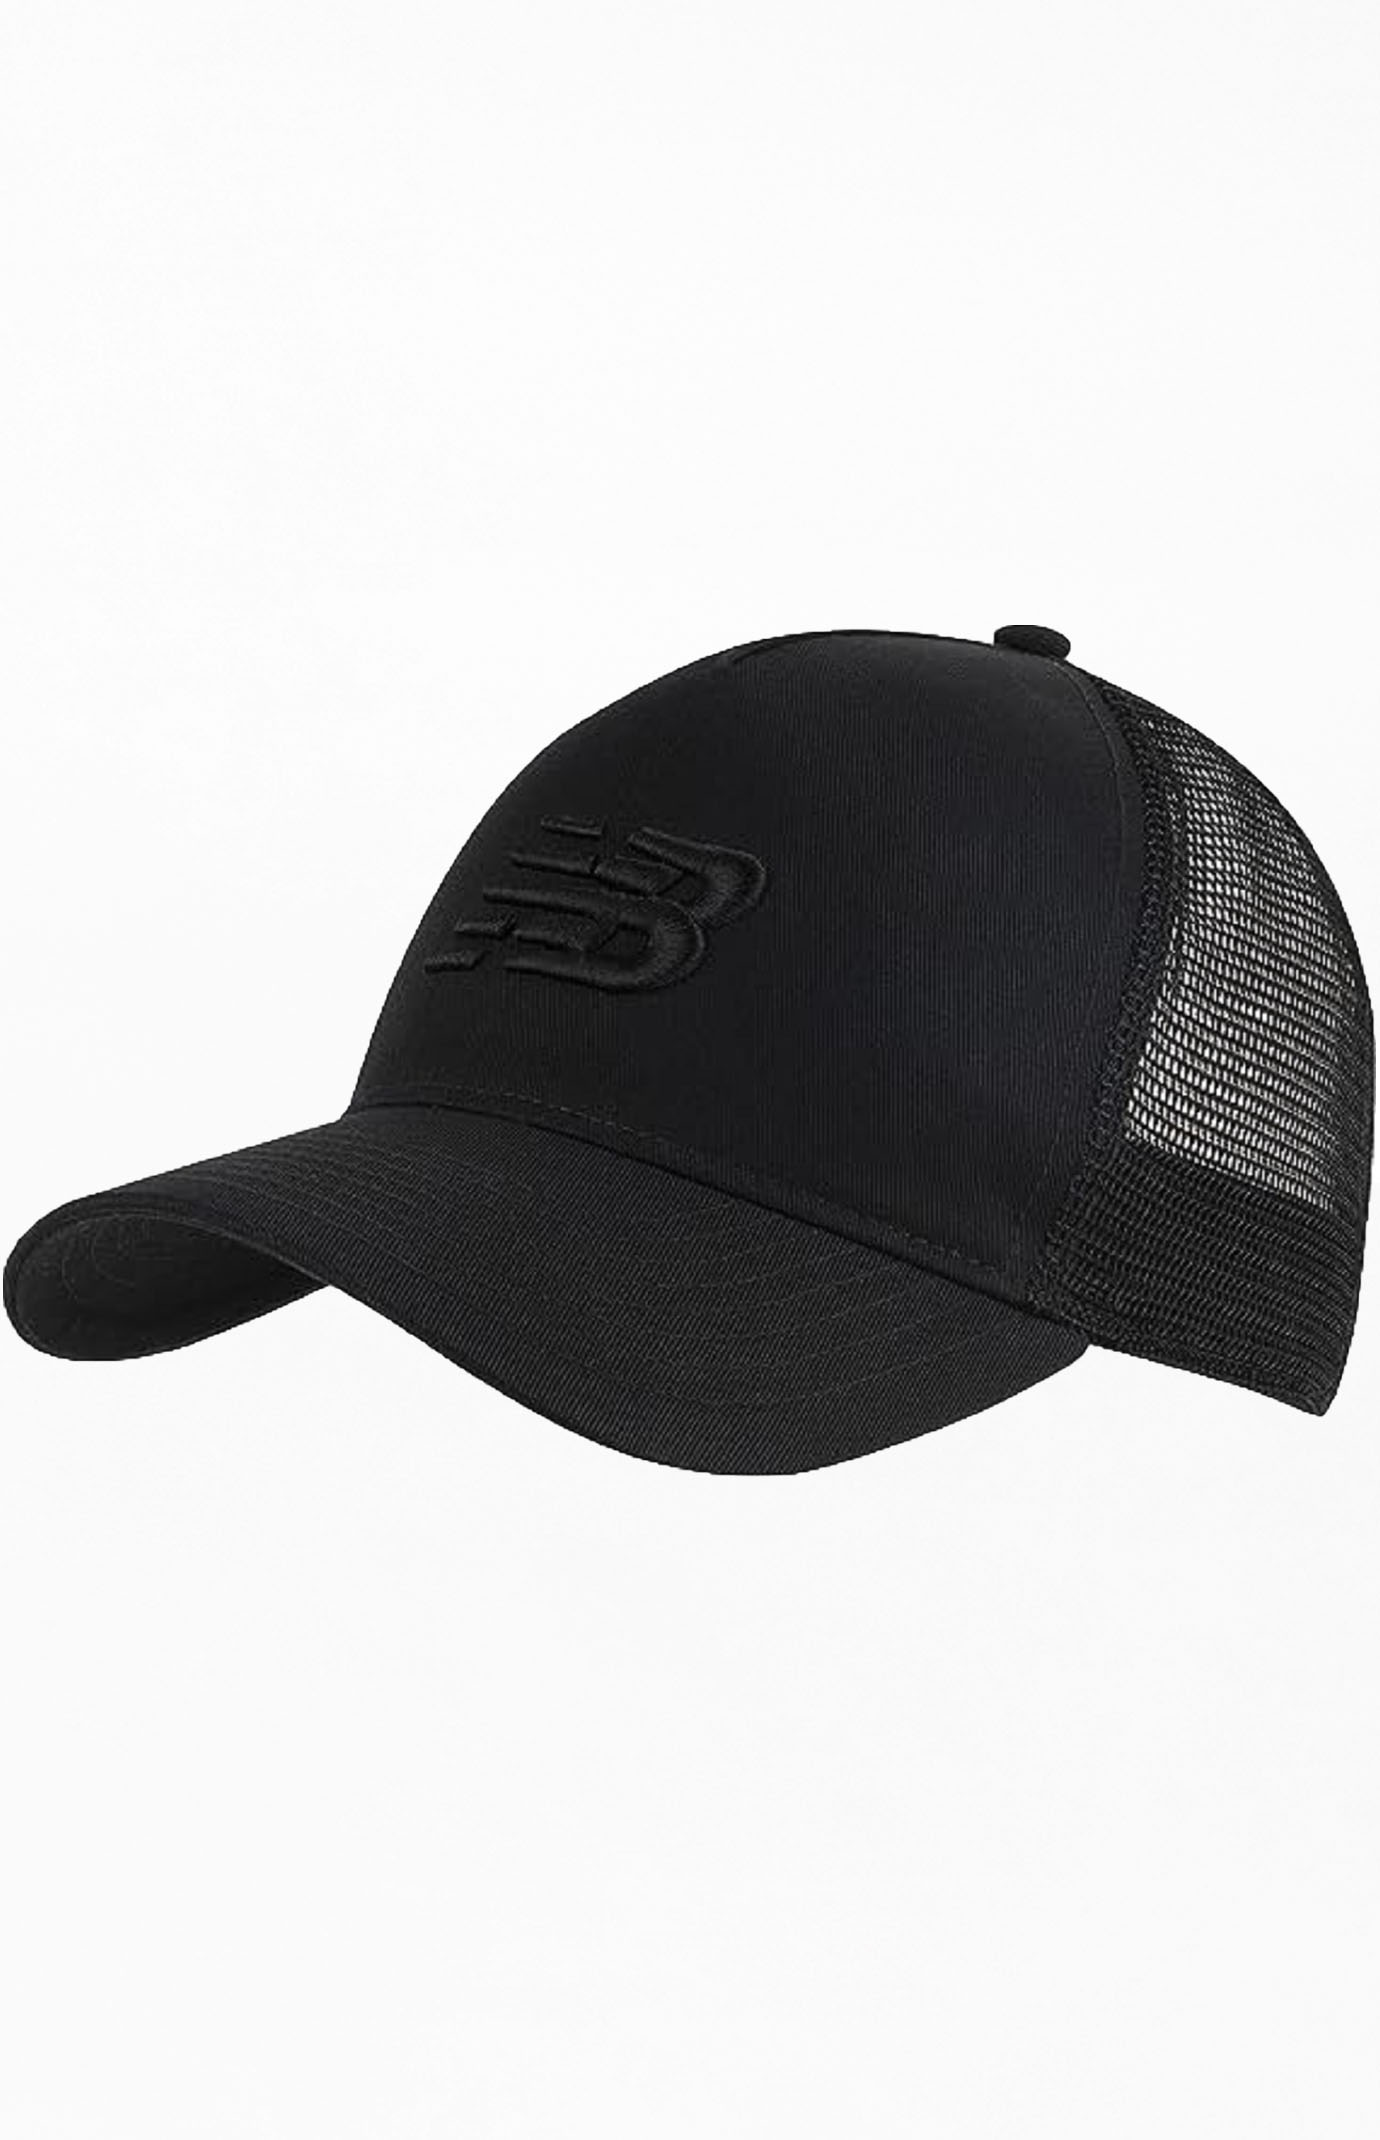 New Balance Trucker Hat | PacSun